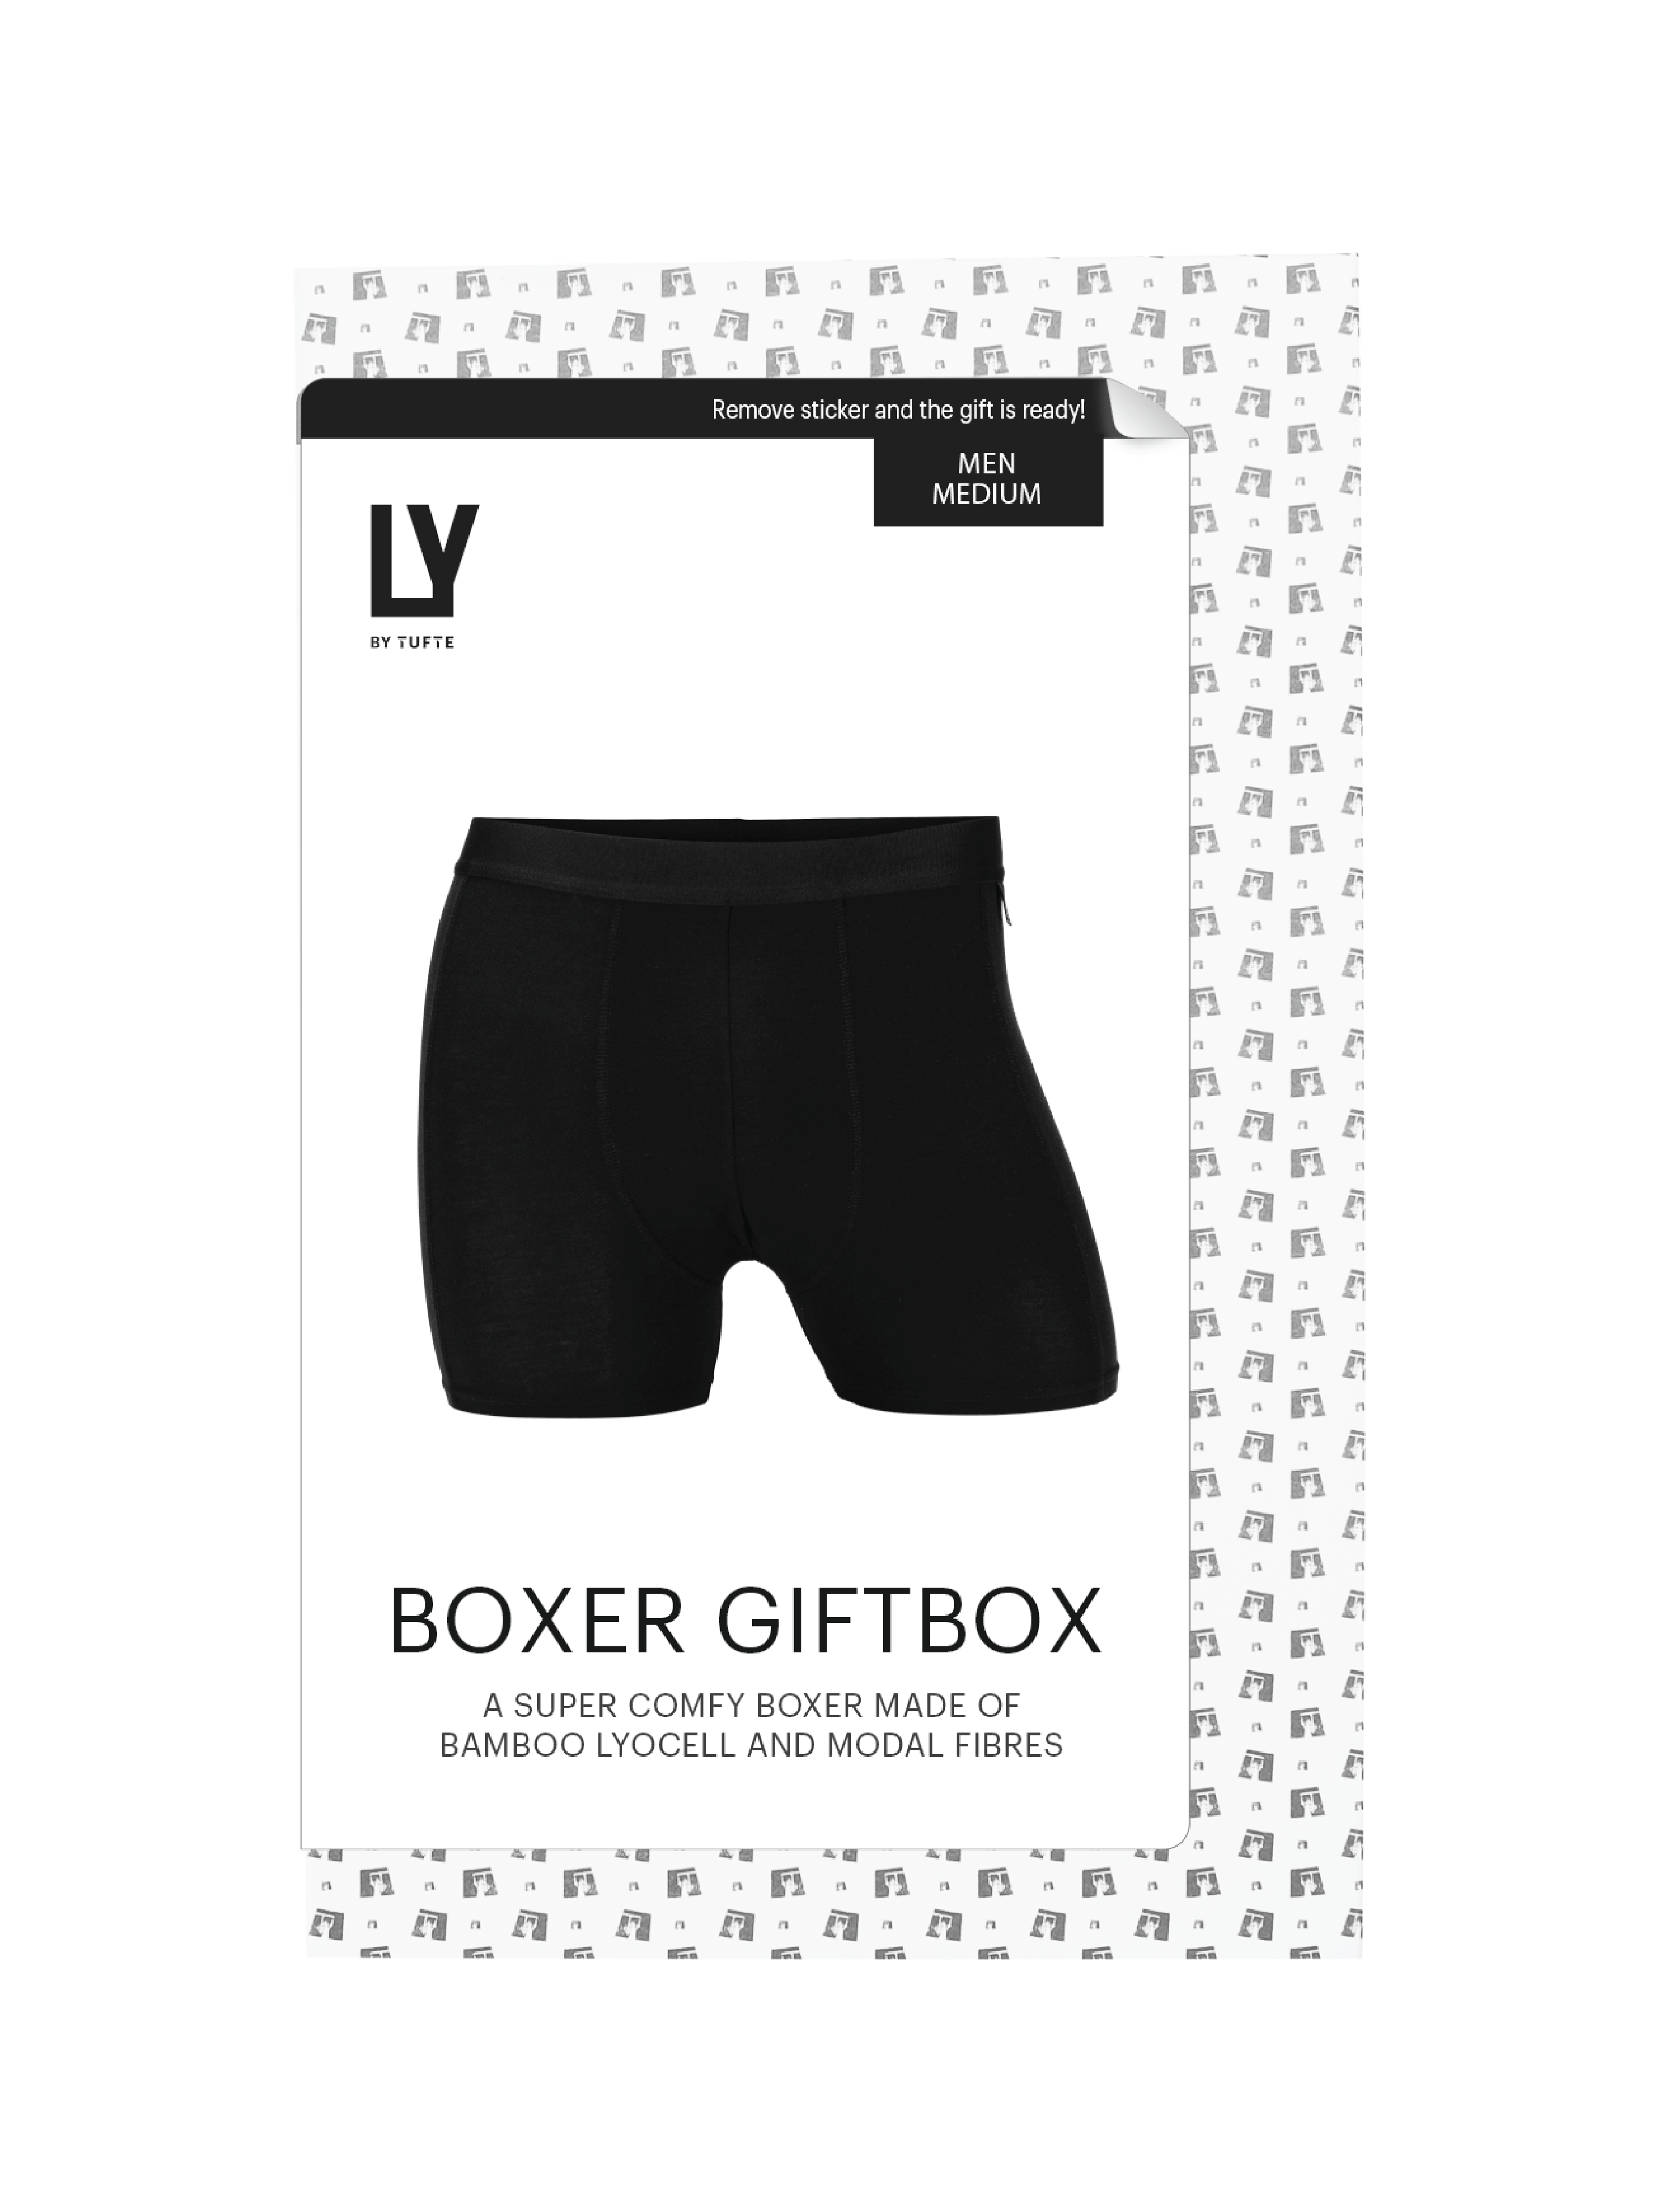 LY by Tufte Boxer Giftbox Black, Størrelse L, 1 stk.